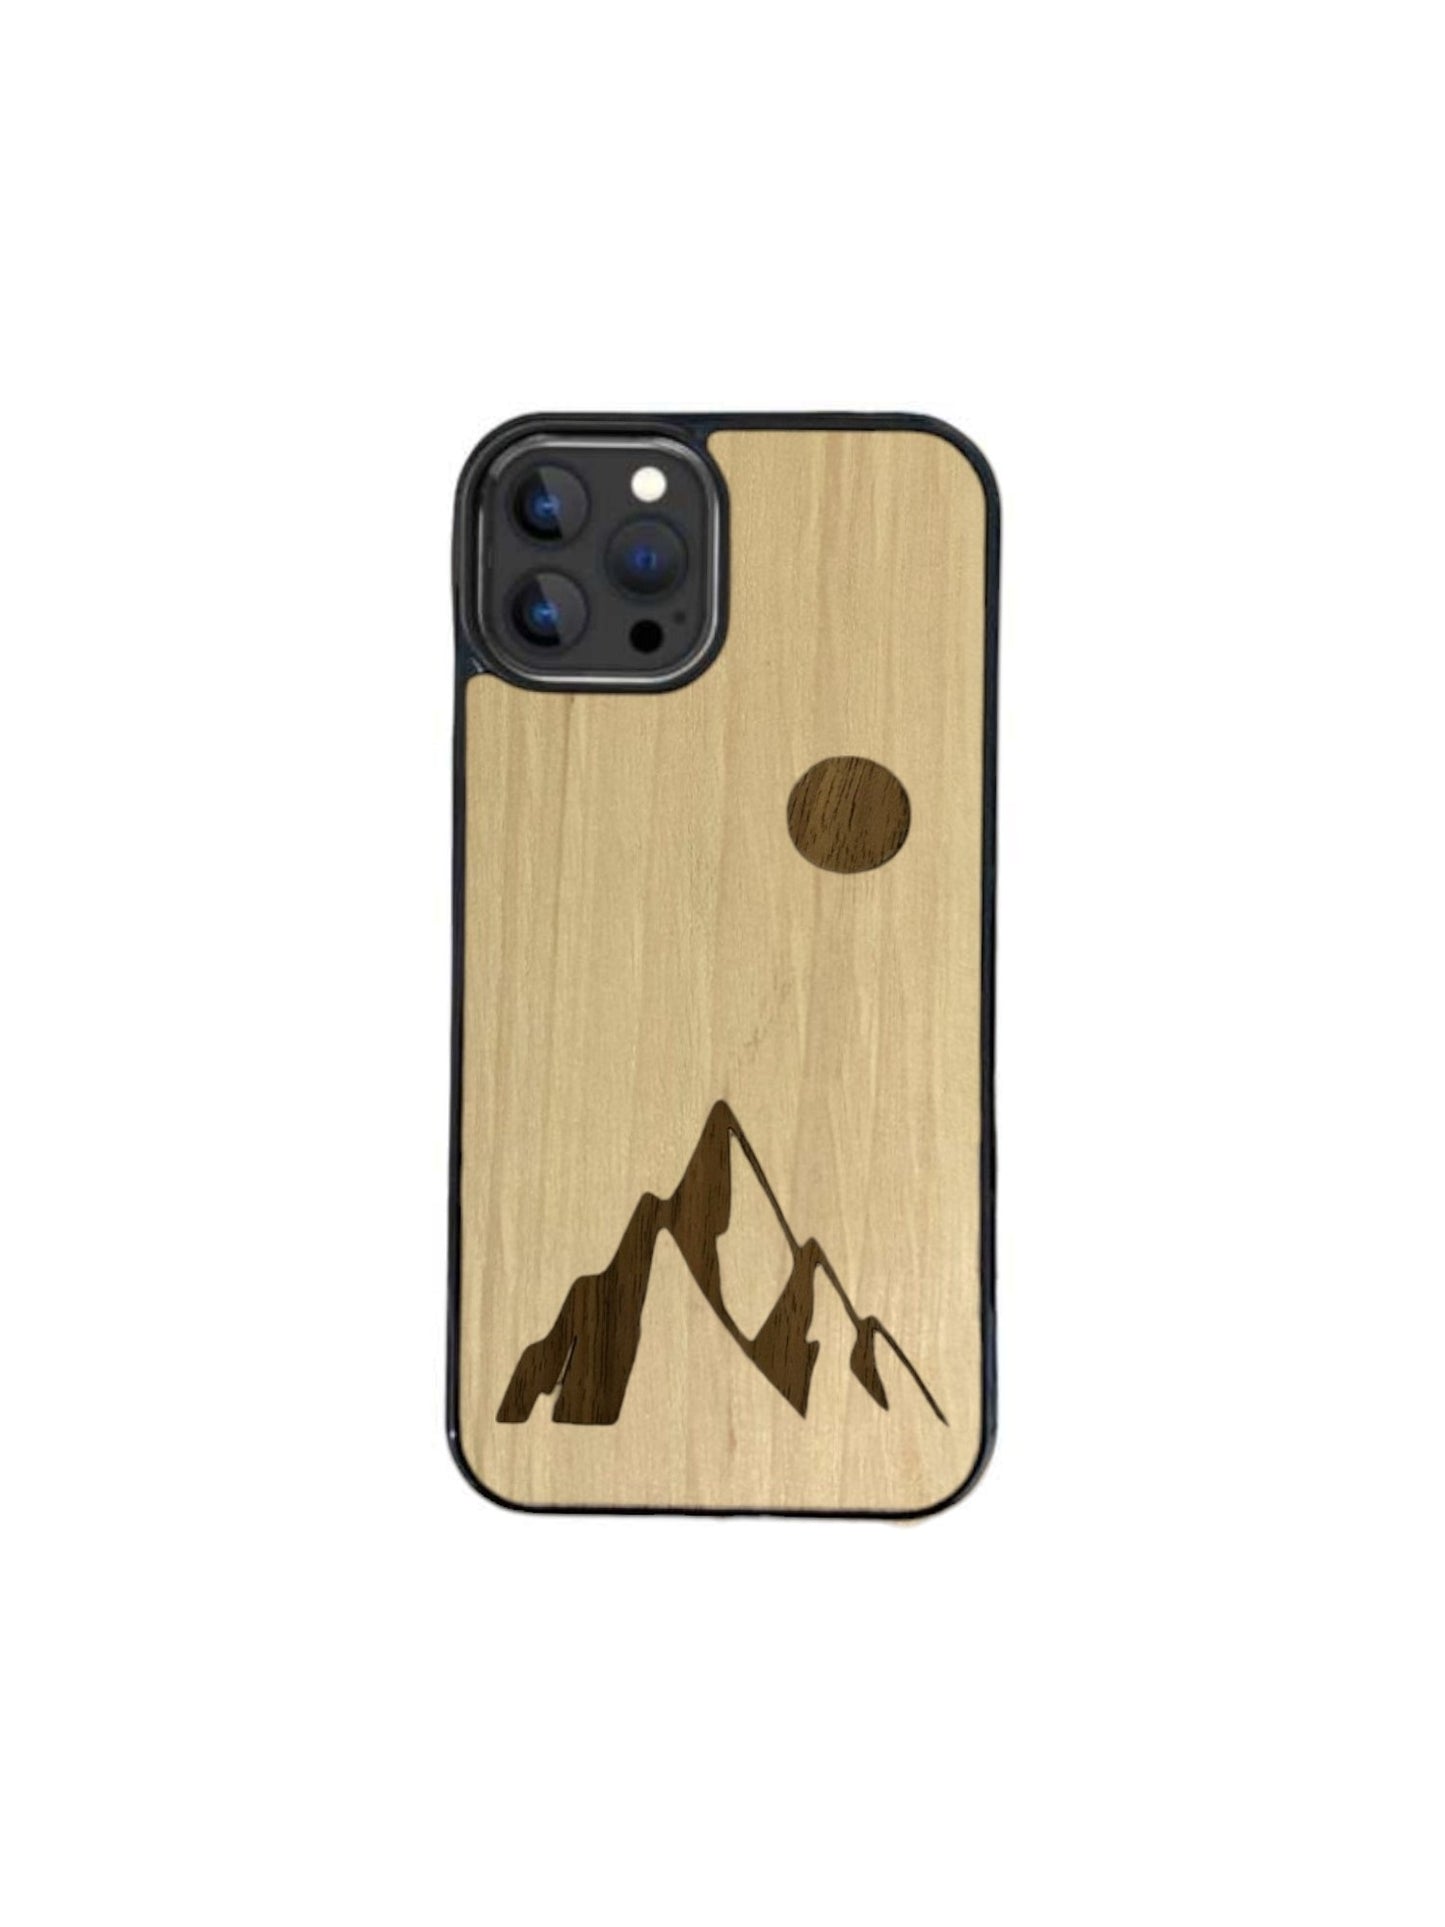 Iphone case - Mountain